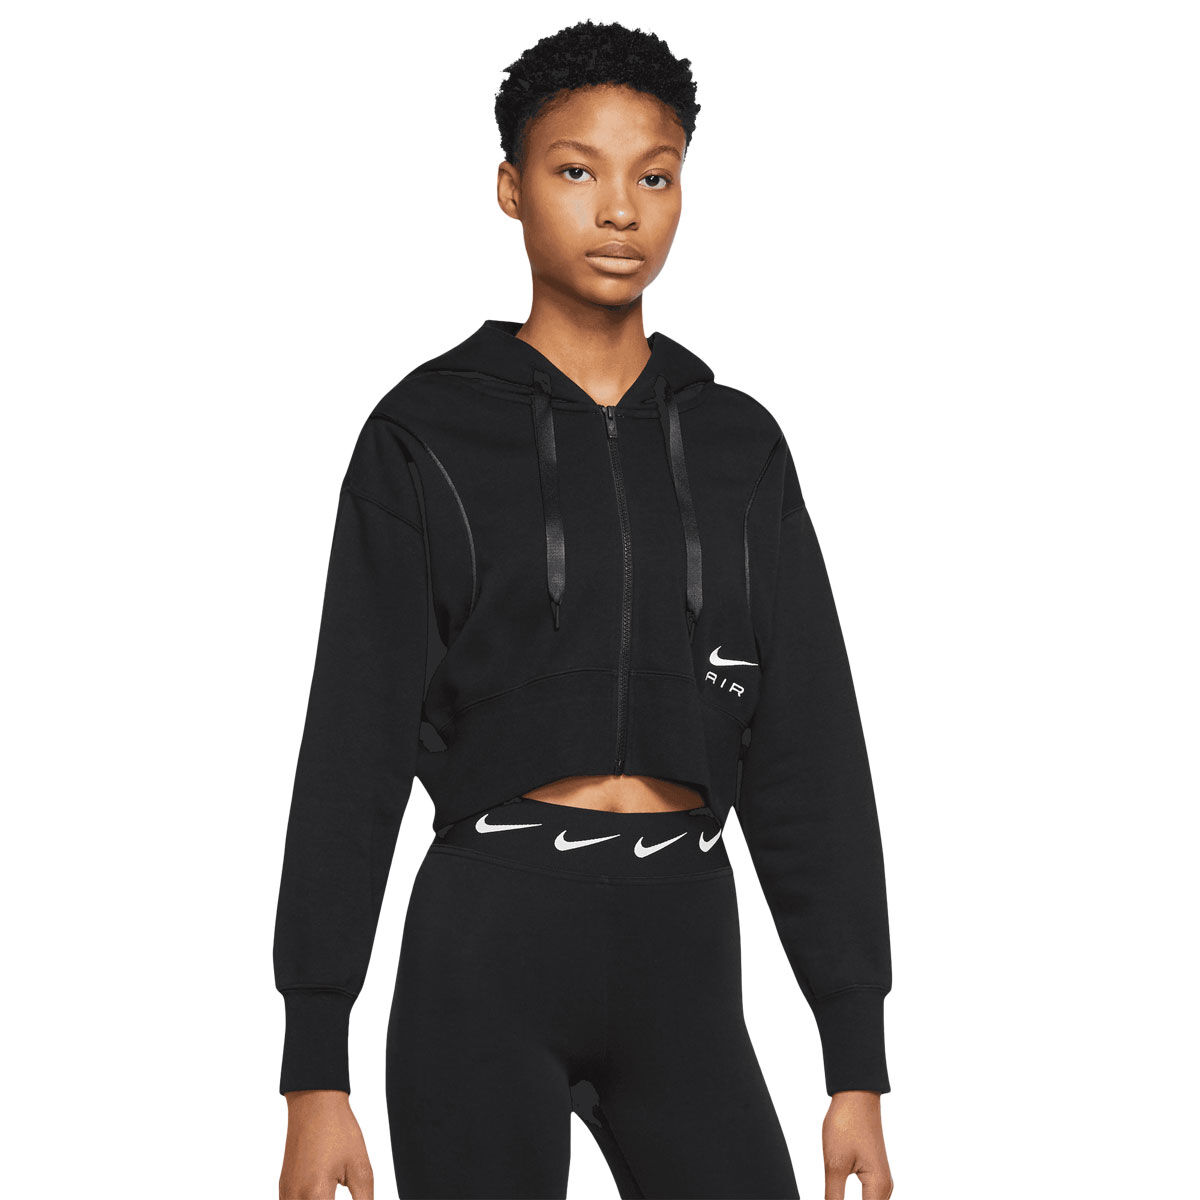 Gray S WOMEN FASHION Jumpers & Sweatshirts Hoodie NoName sweatshirt discount 75% 